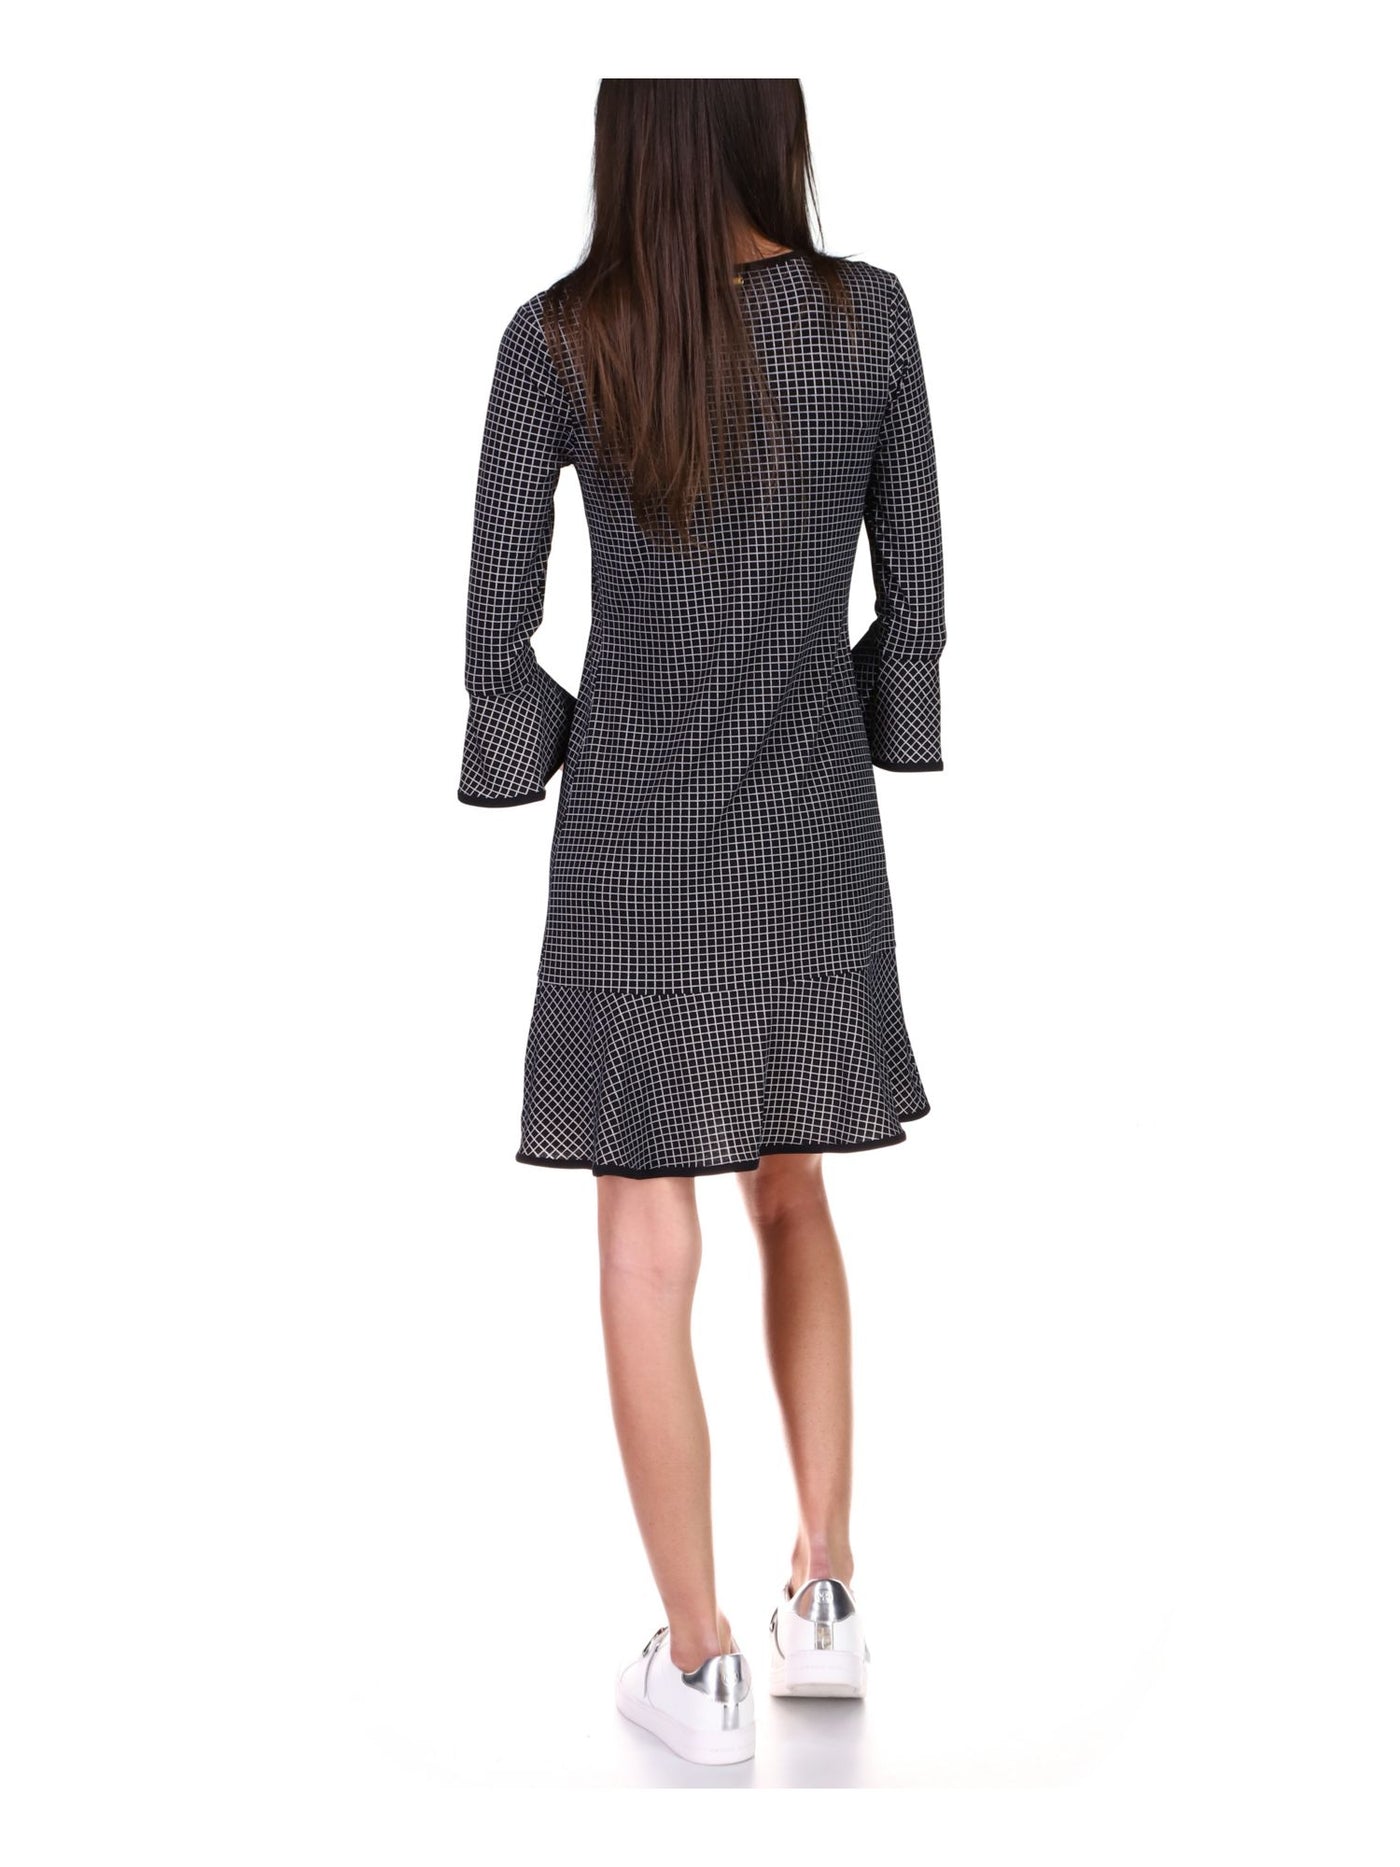 MICHAEL KORS Womens Black Printed 3/4 Sleeve Scoop Neck Above The Knee Shift Dress Petites PS